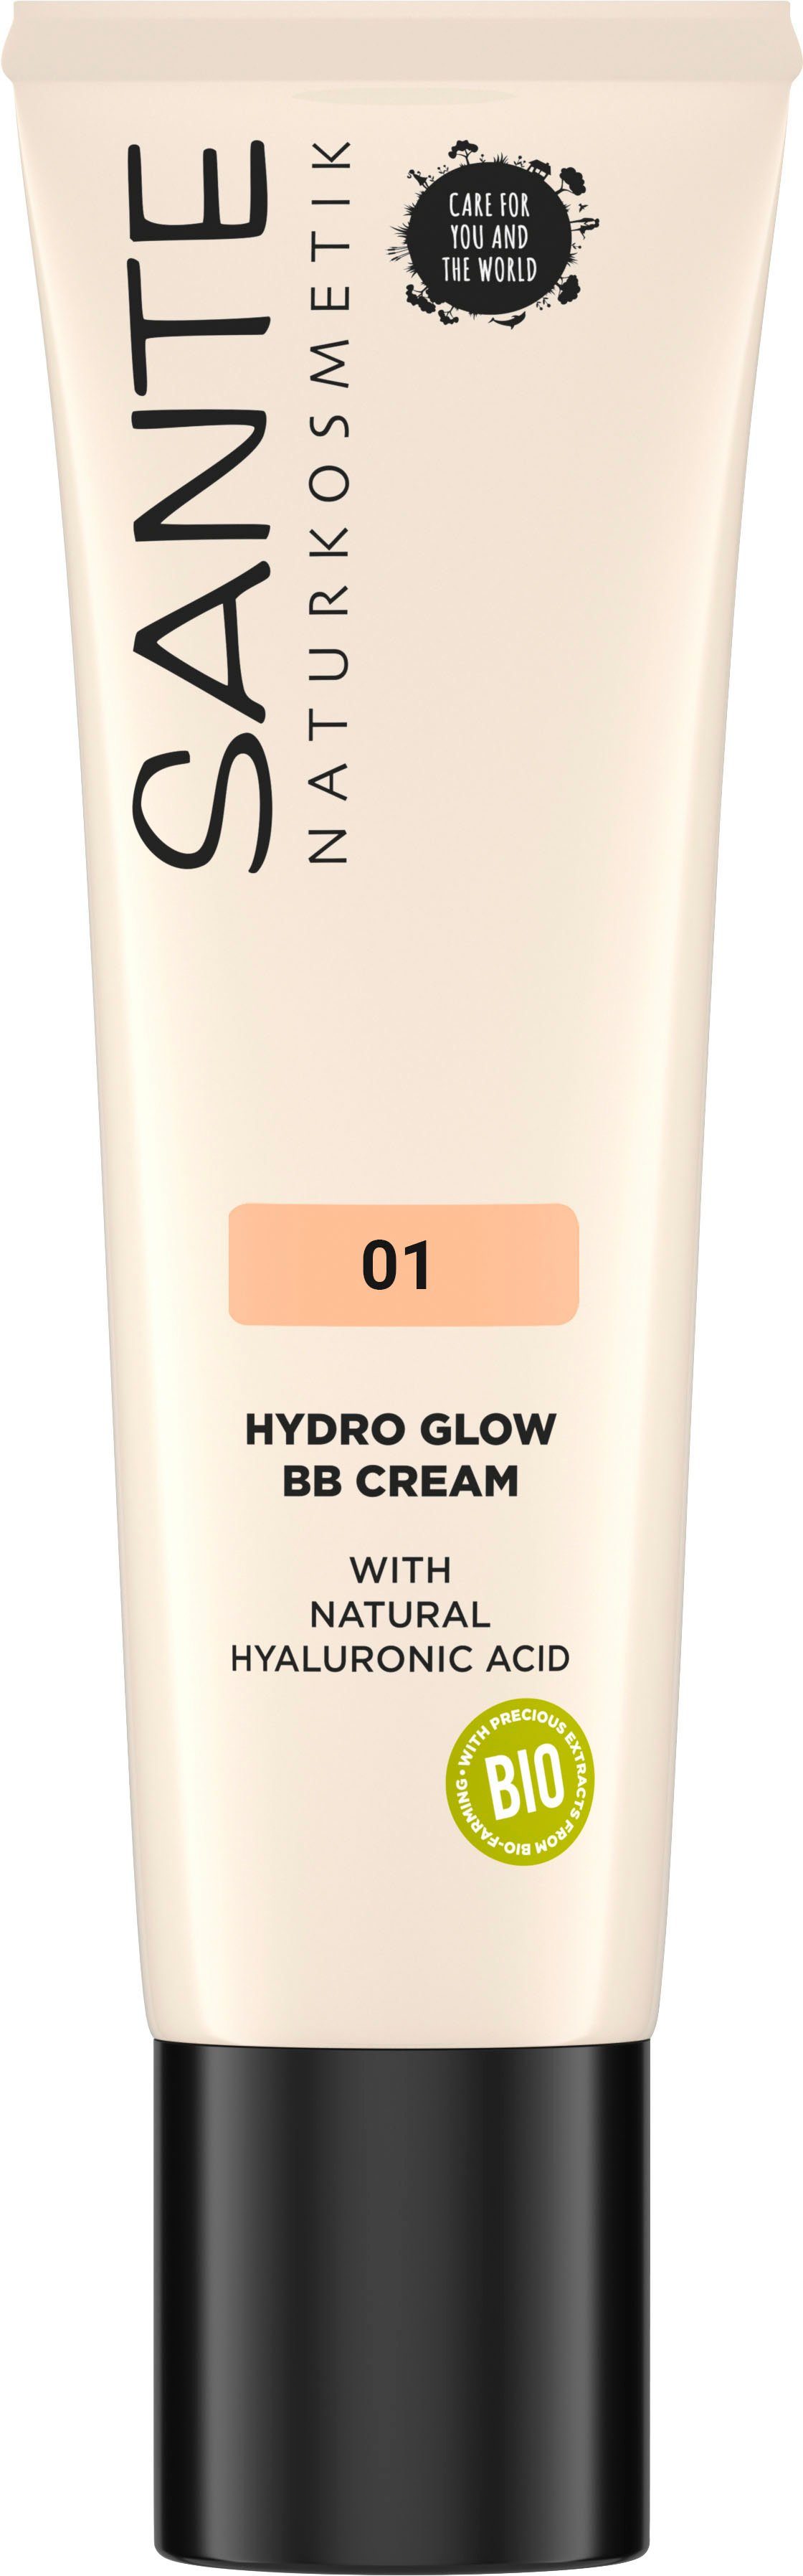 SANTE Make-up Sante Hydro Glow Cream BB Light-Medium 01